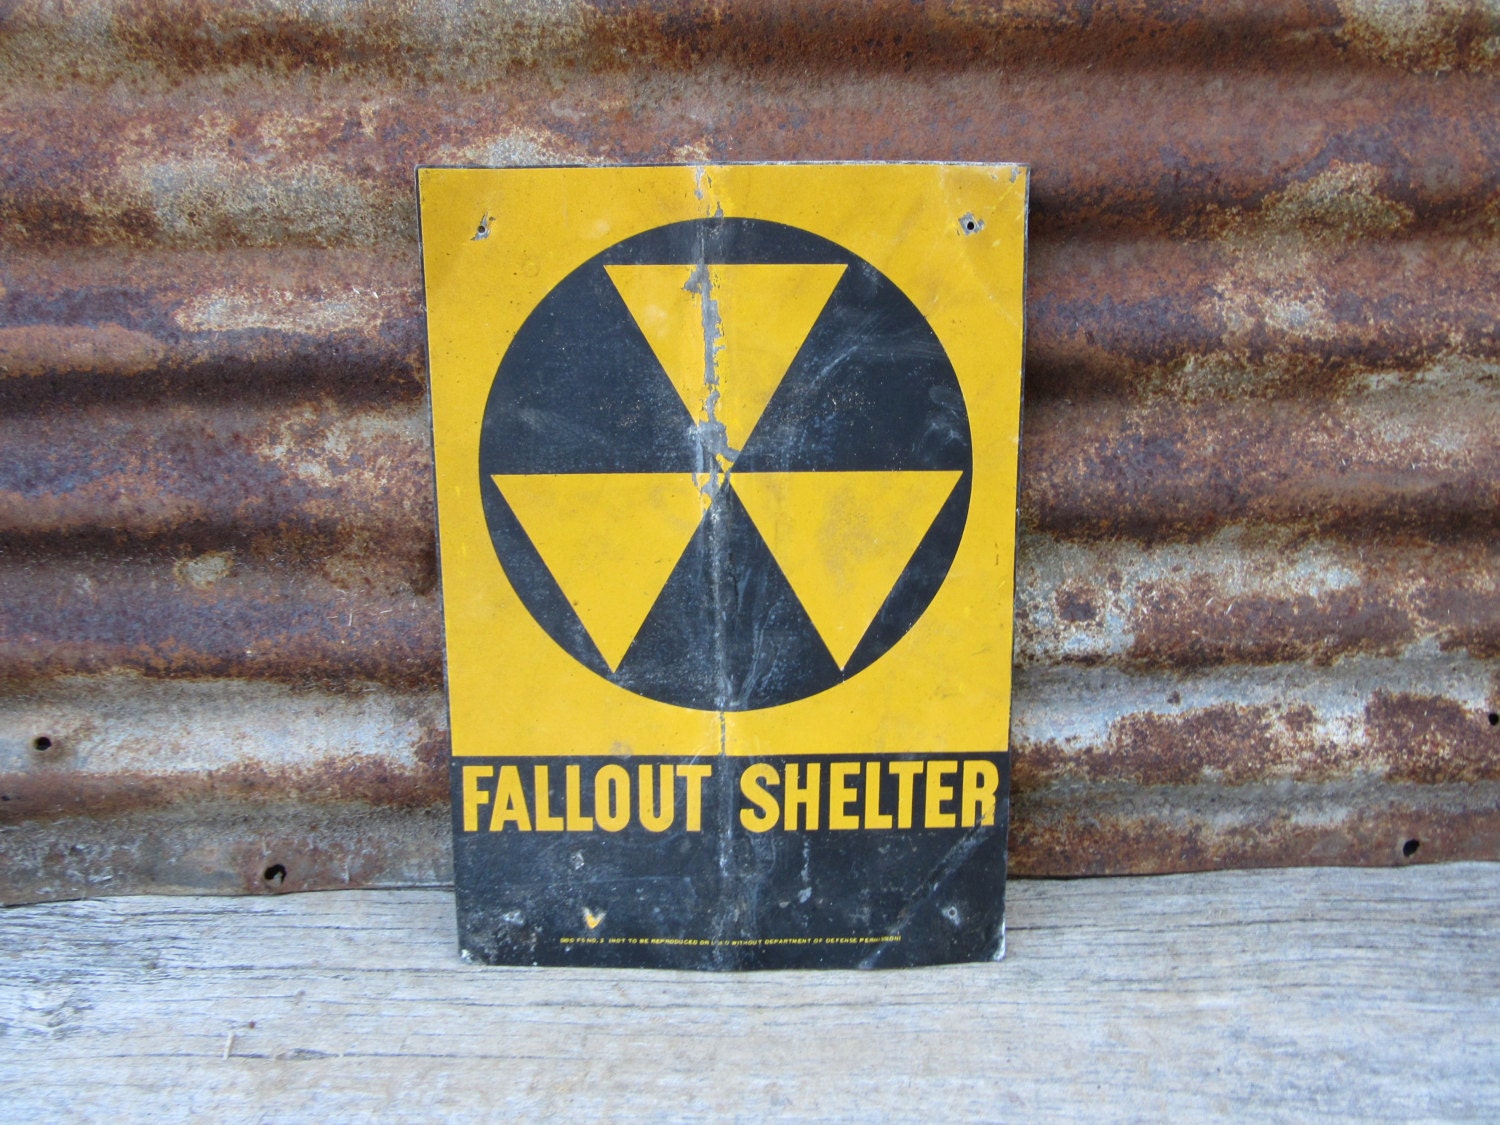 fallout shelter symbol punk rock